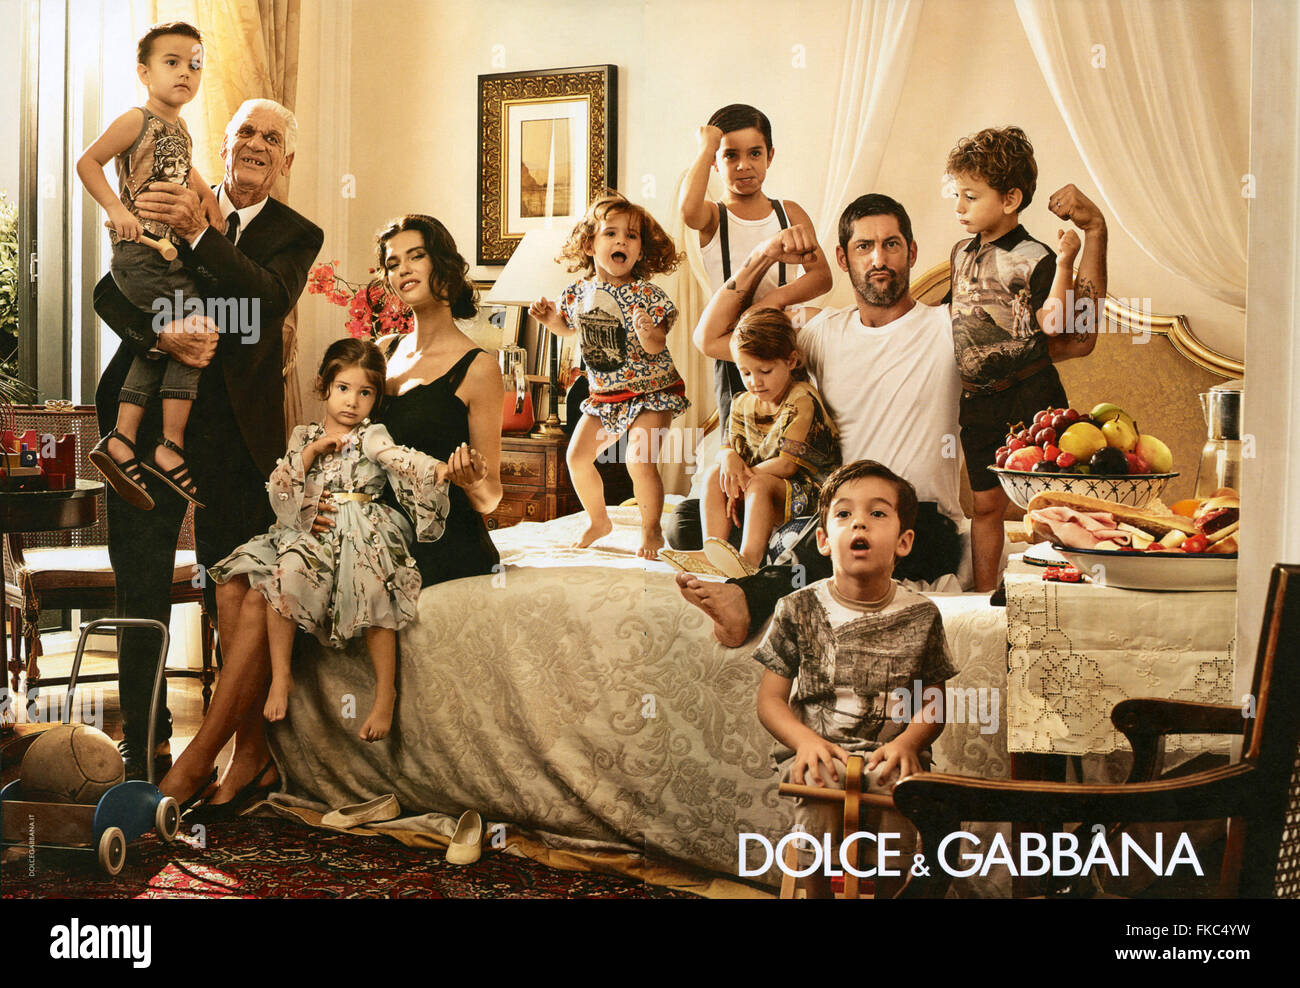 Dolce \u0026 Gabbana Advert Banque d'image 